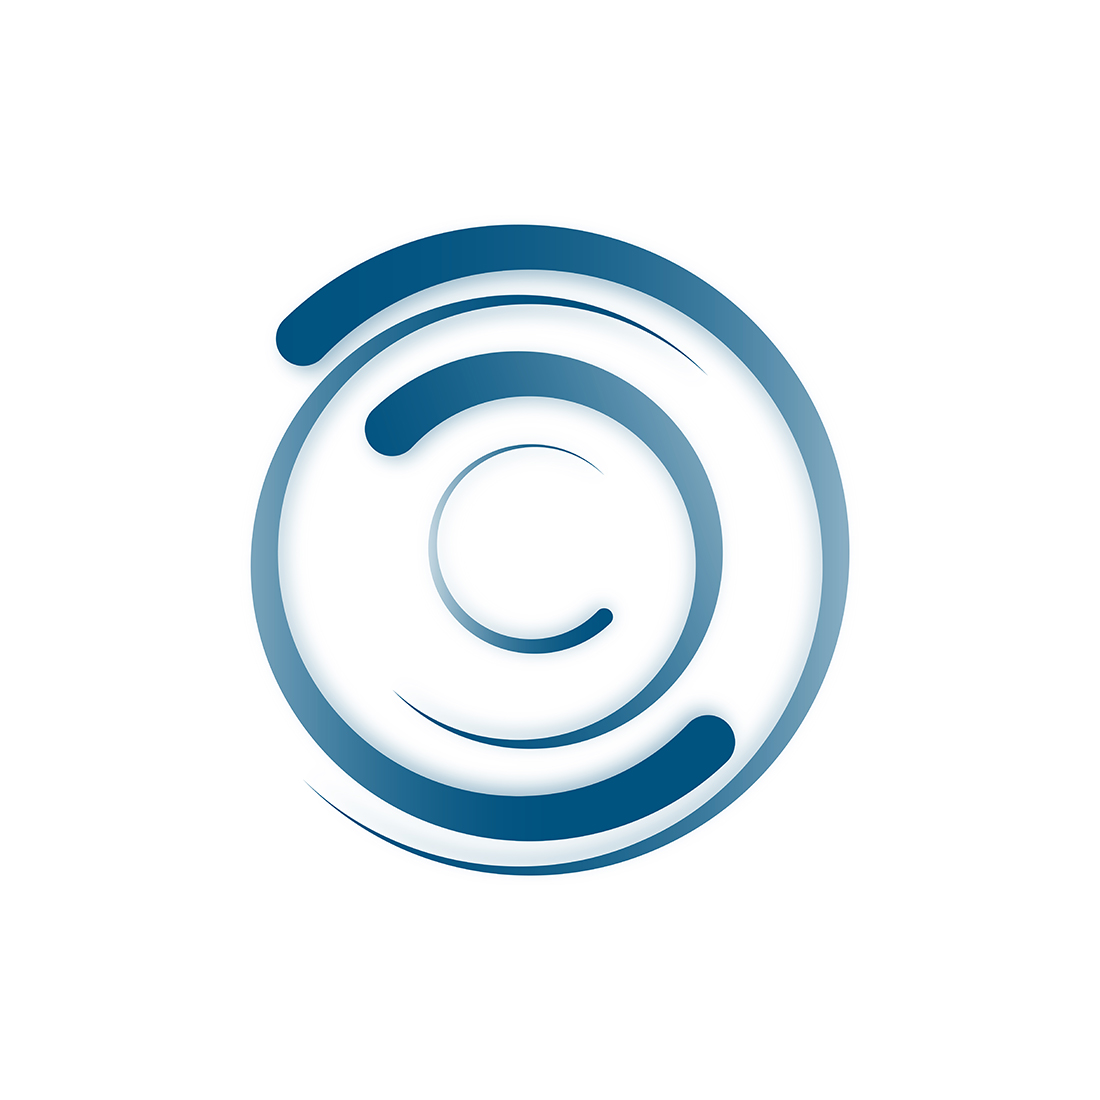 Modern Spiral Shaped logo cover image.